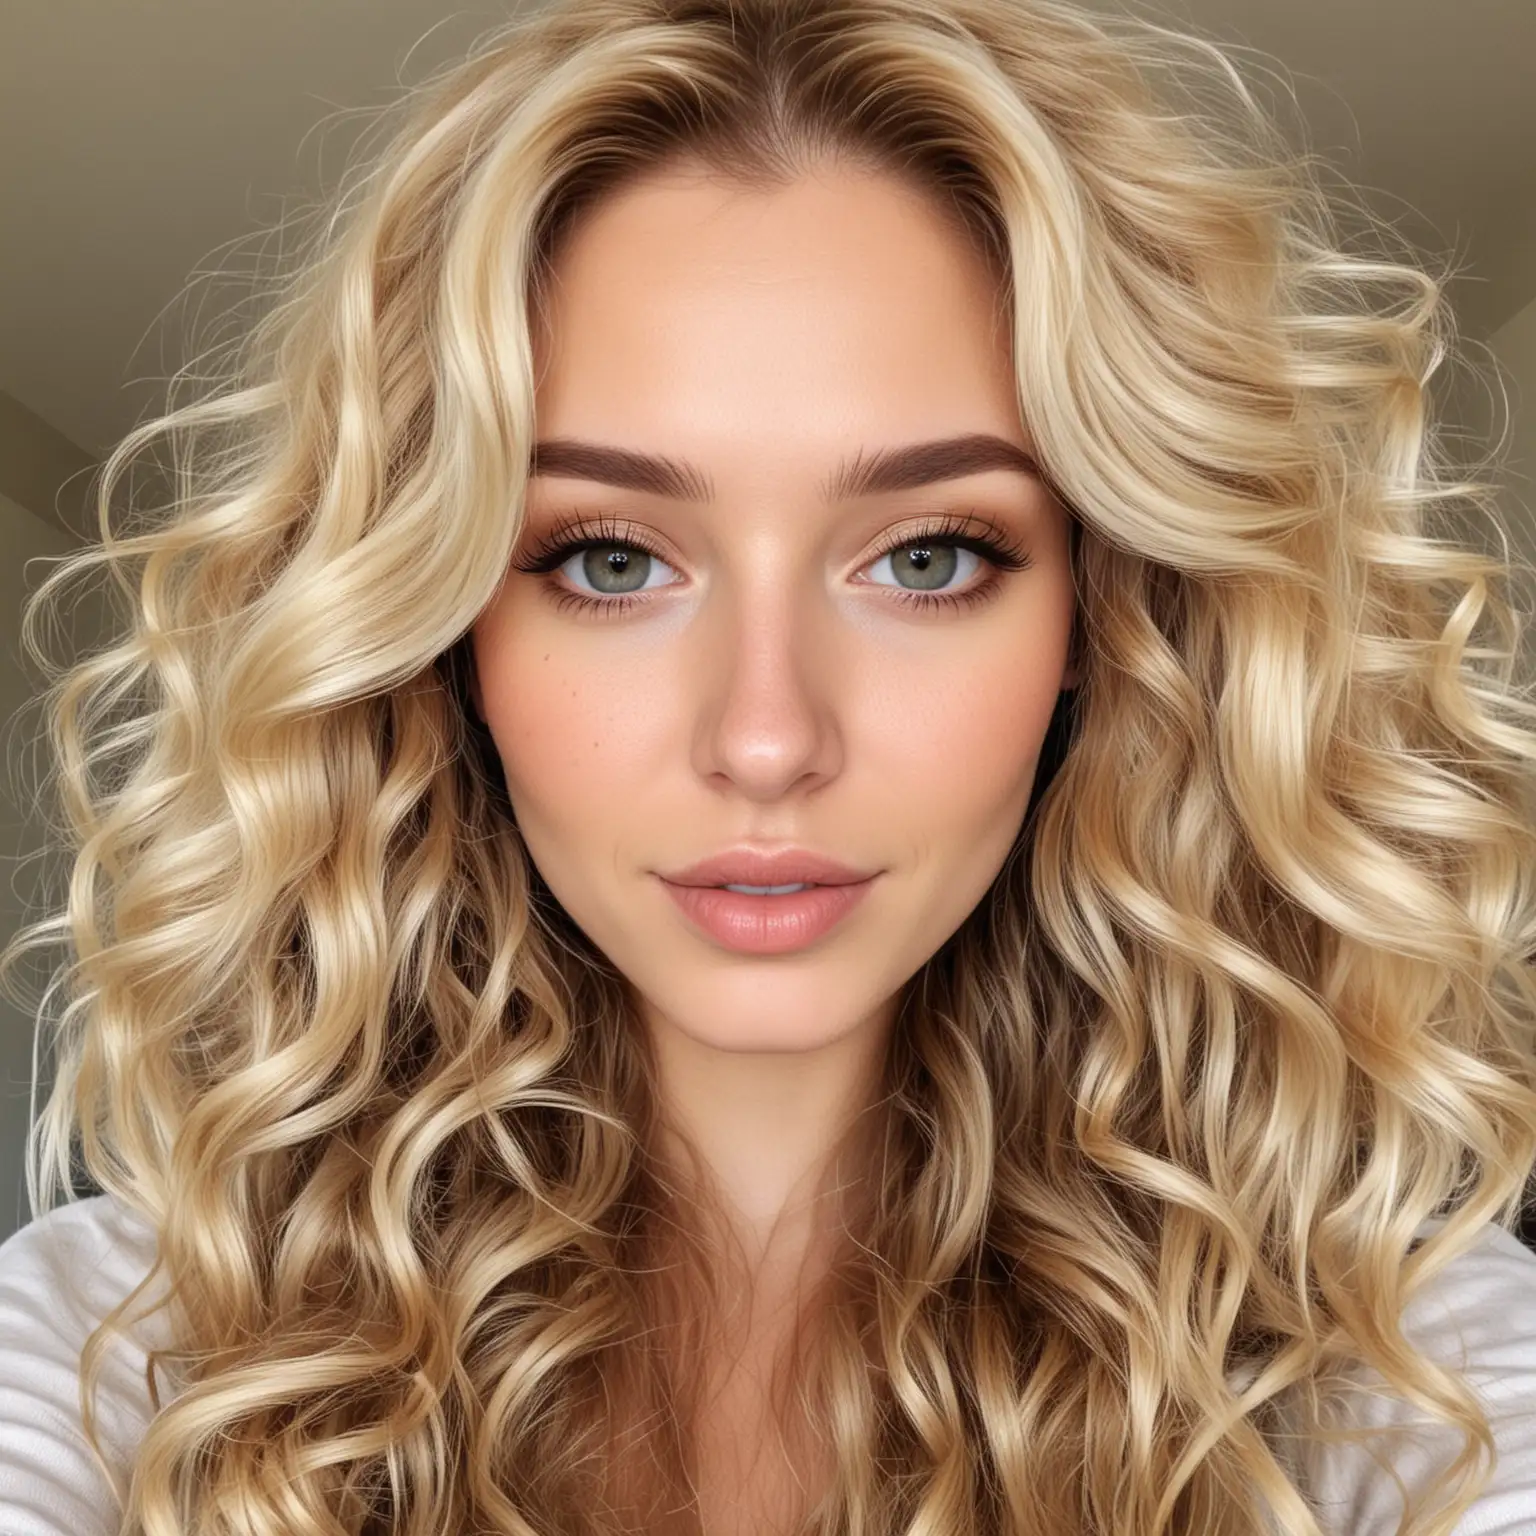 selfie of a woman in beautiful blonde wavy hair